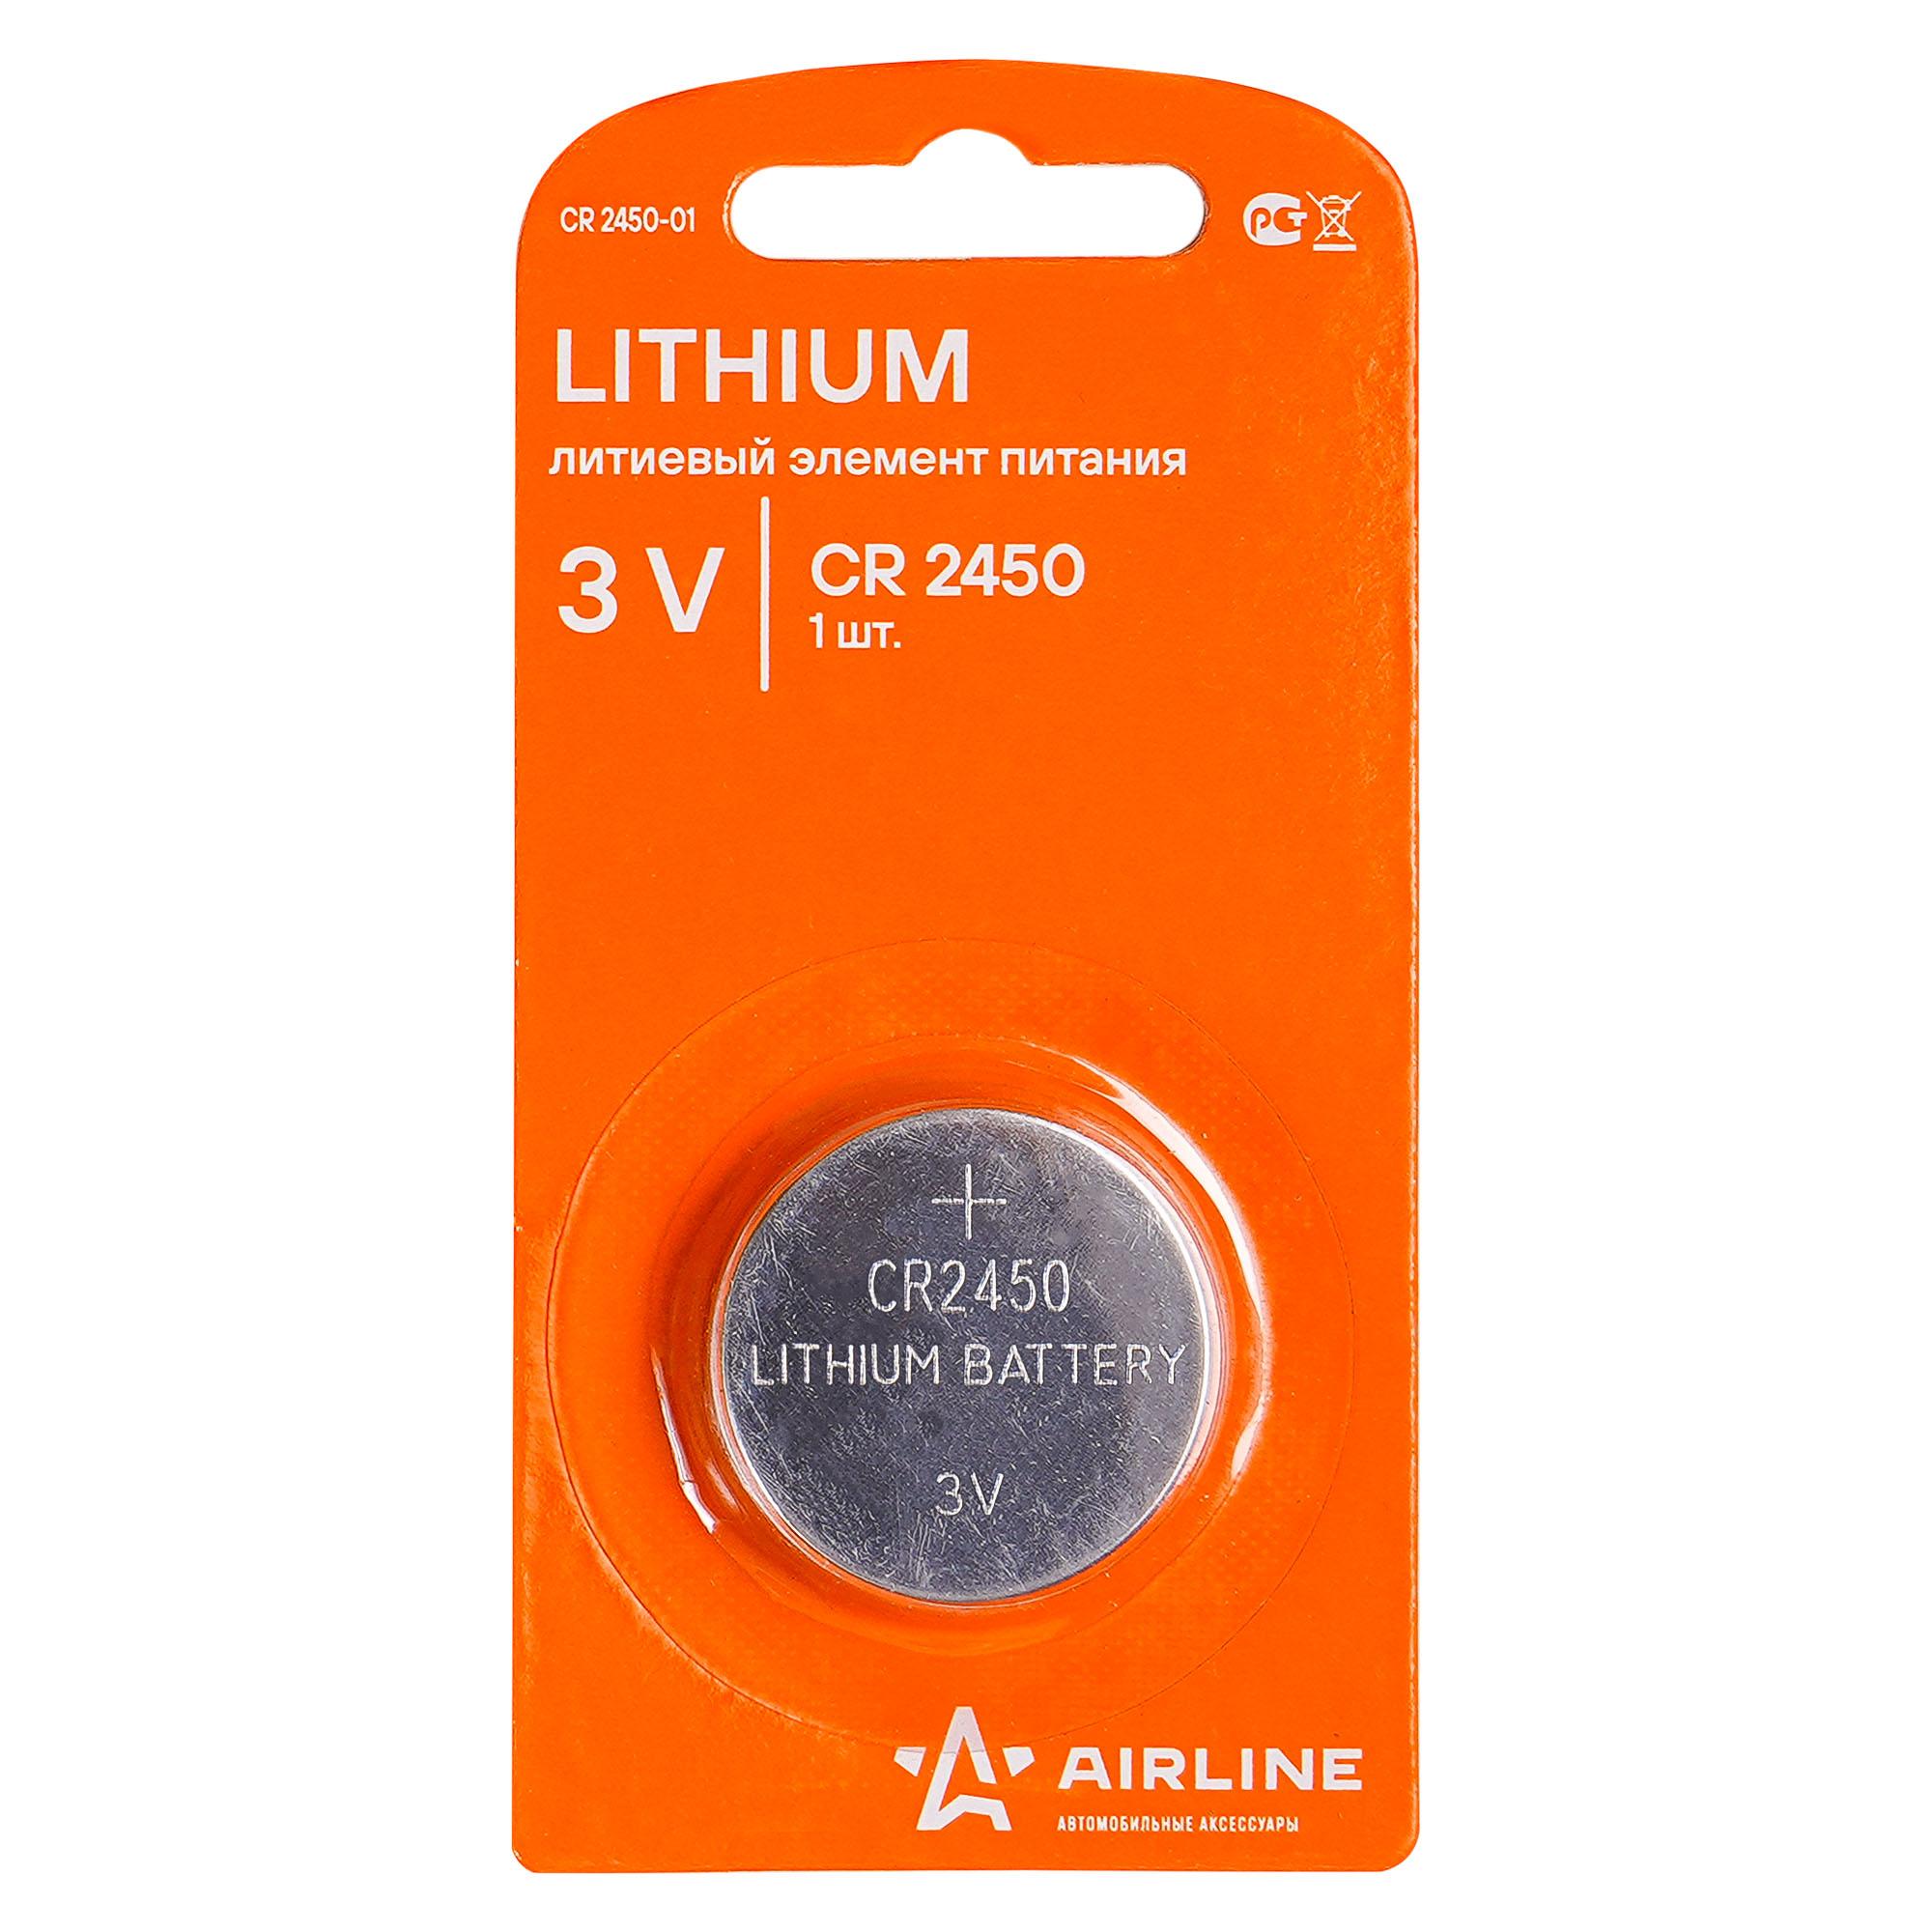 AIRLINE CR245001 Батарейка CR2450 3V для брелоков сигнализаций литиевая 1 шт. (CR2450-01) airline cr122001 батарейка cr1220 3v для брелоков сигнализаций литиевая 1 шт cr1220 01